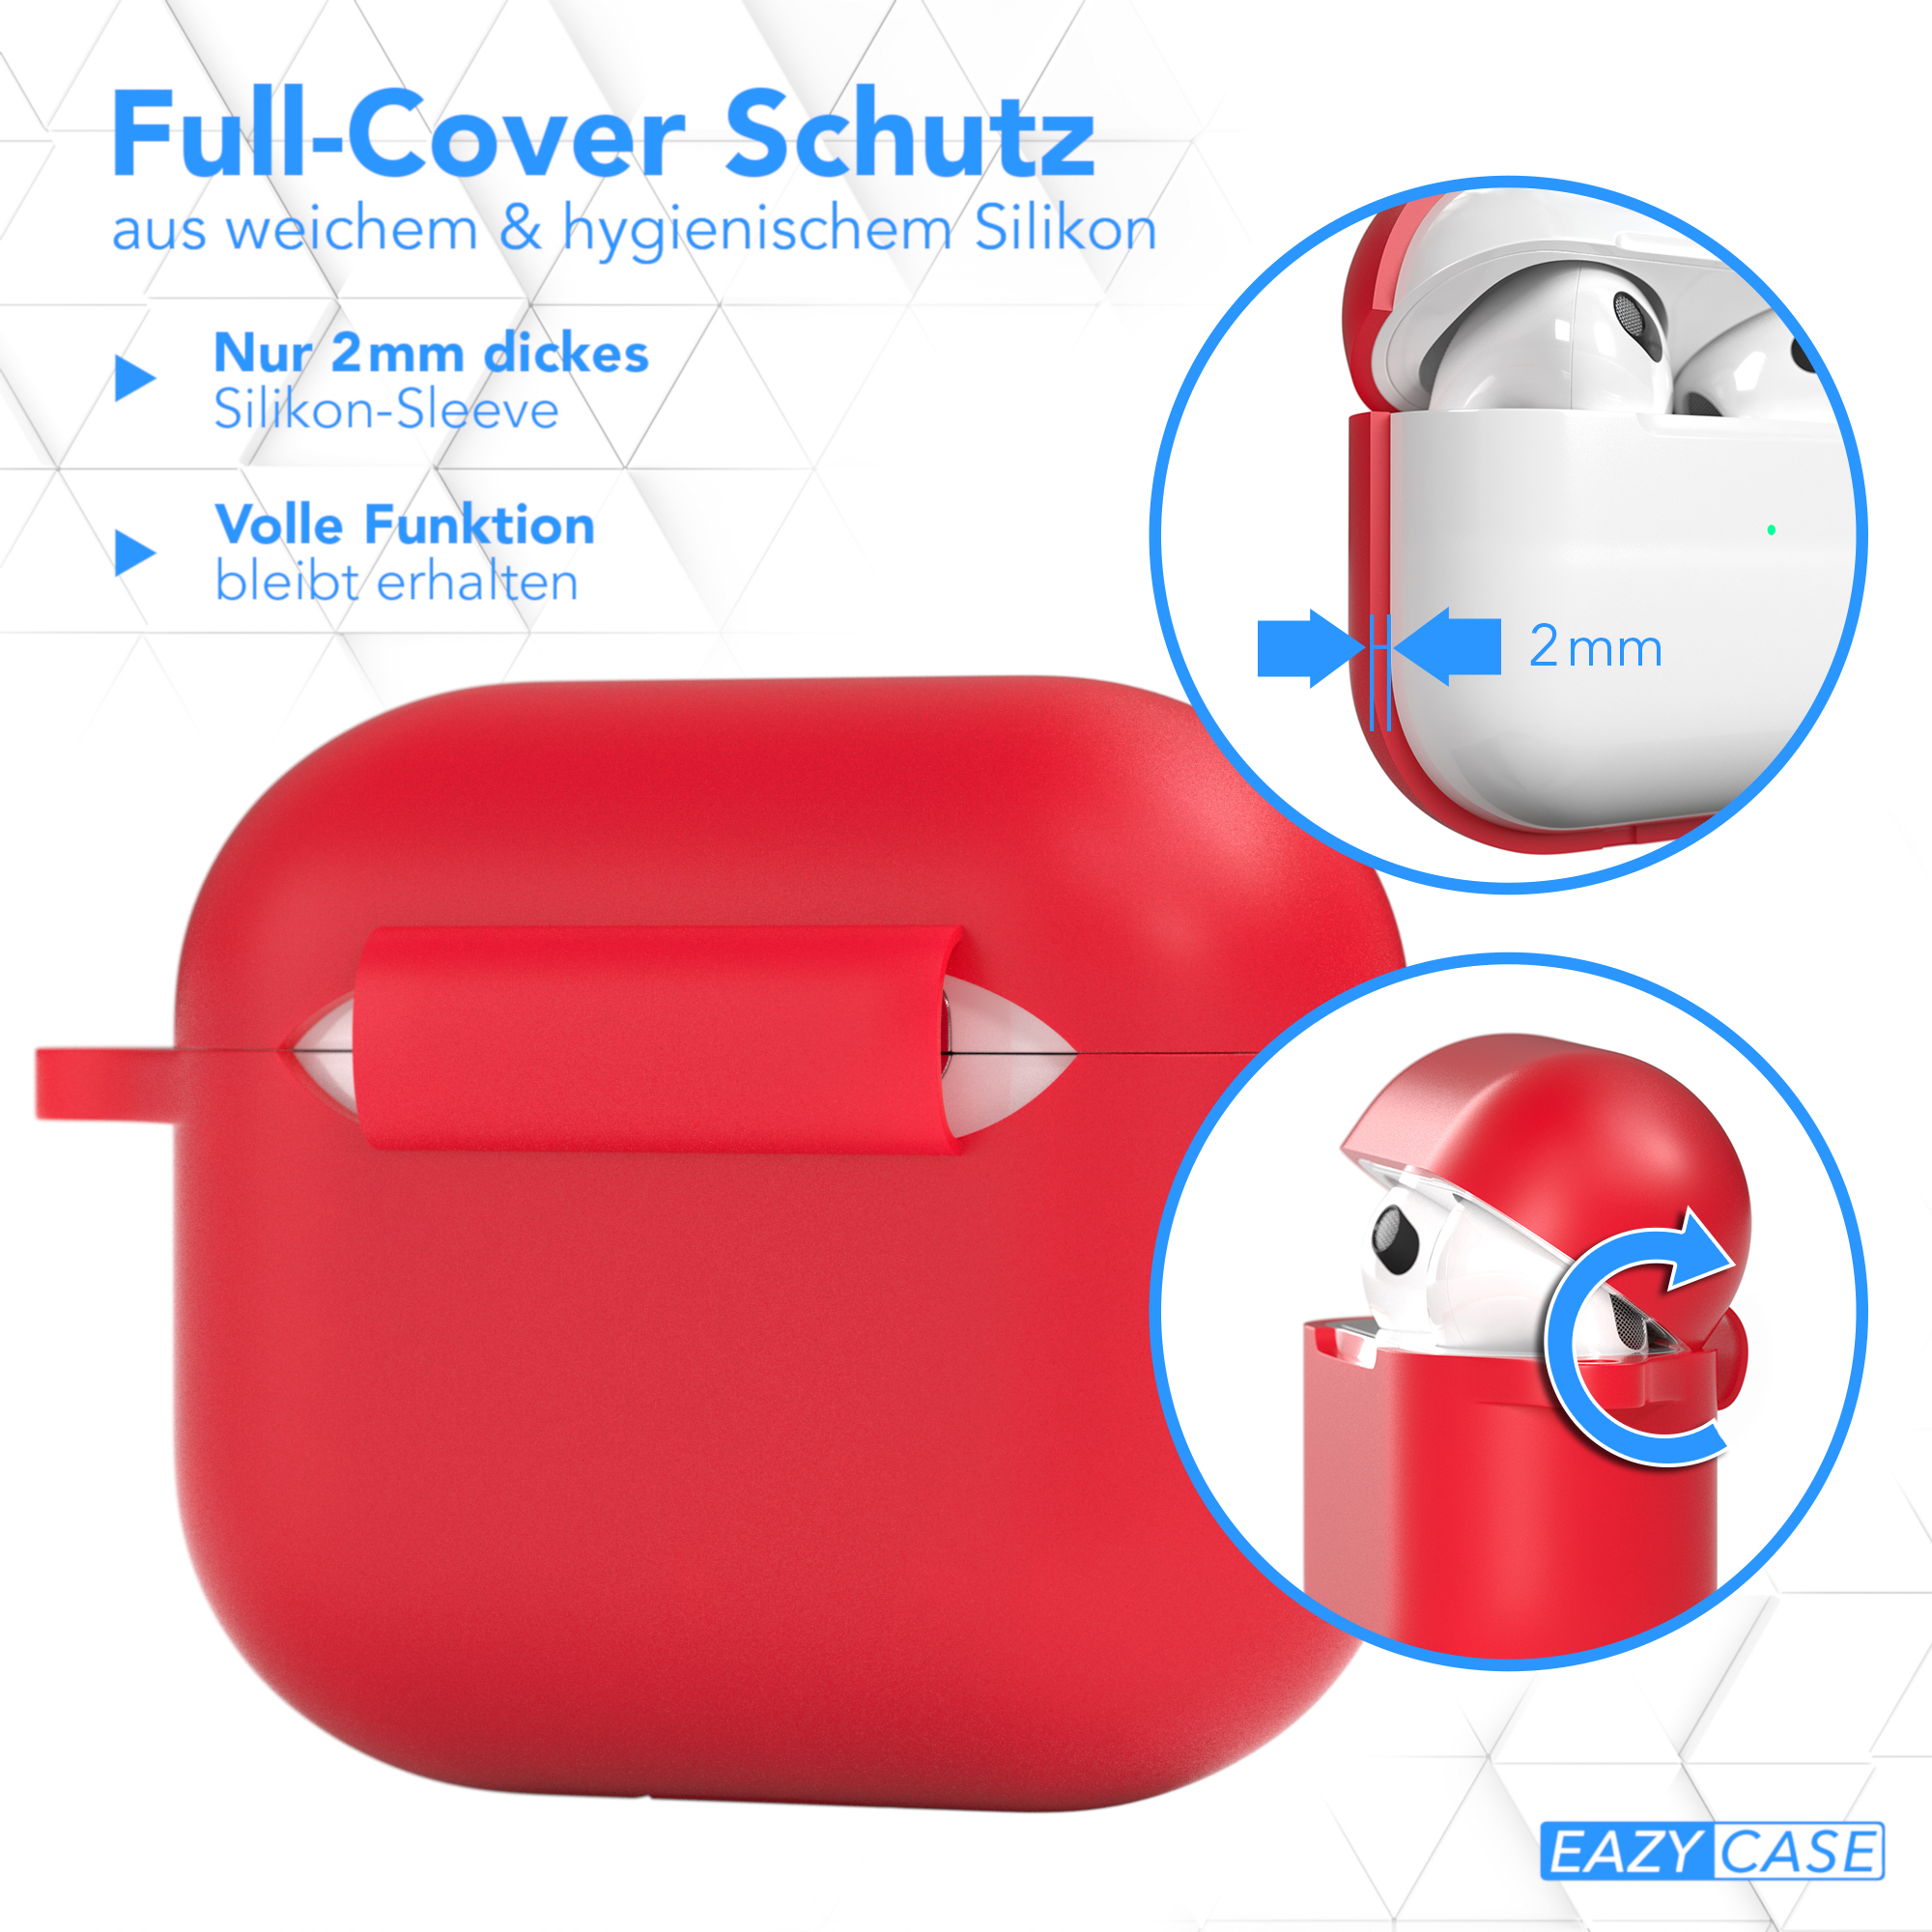 EAZY CASE AirPods 3 Silikon Schutzhülle Case Rot passend Apple für: Sleeve